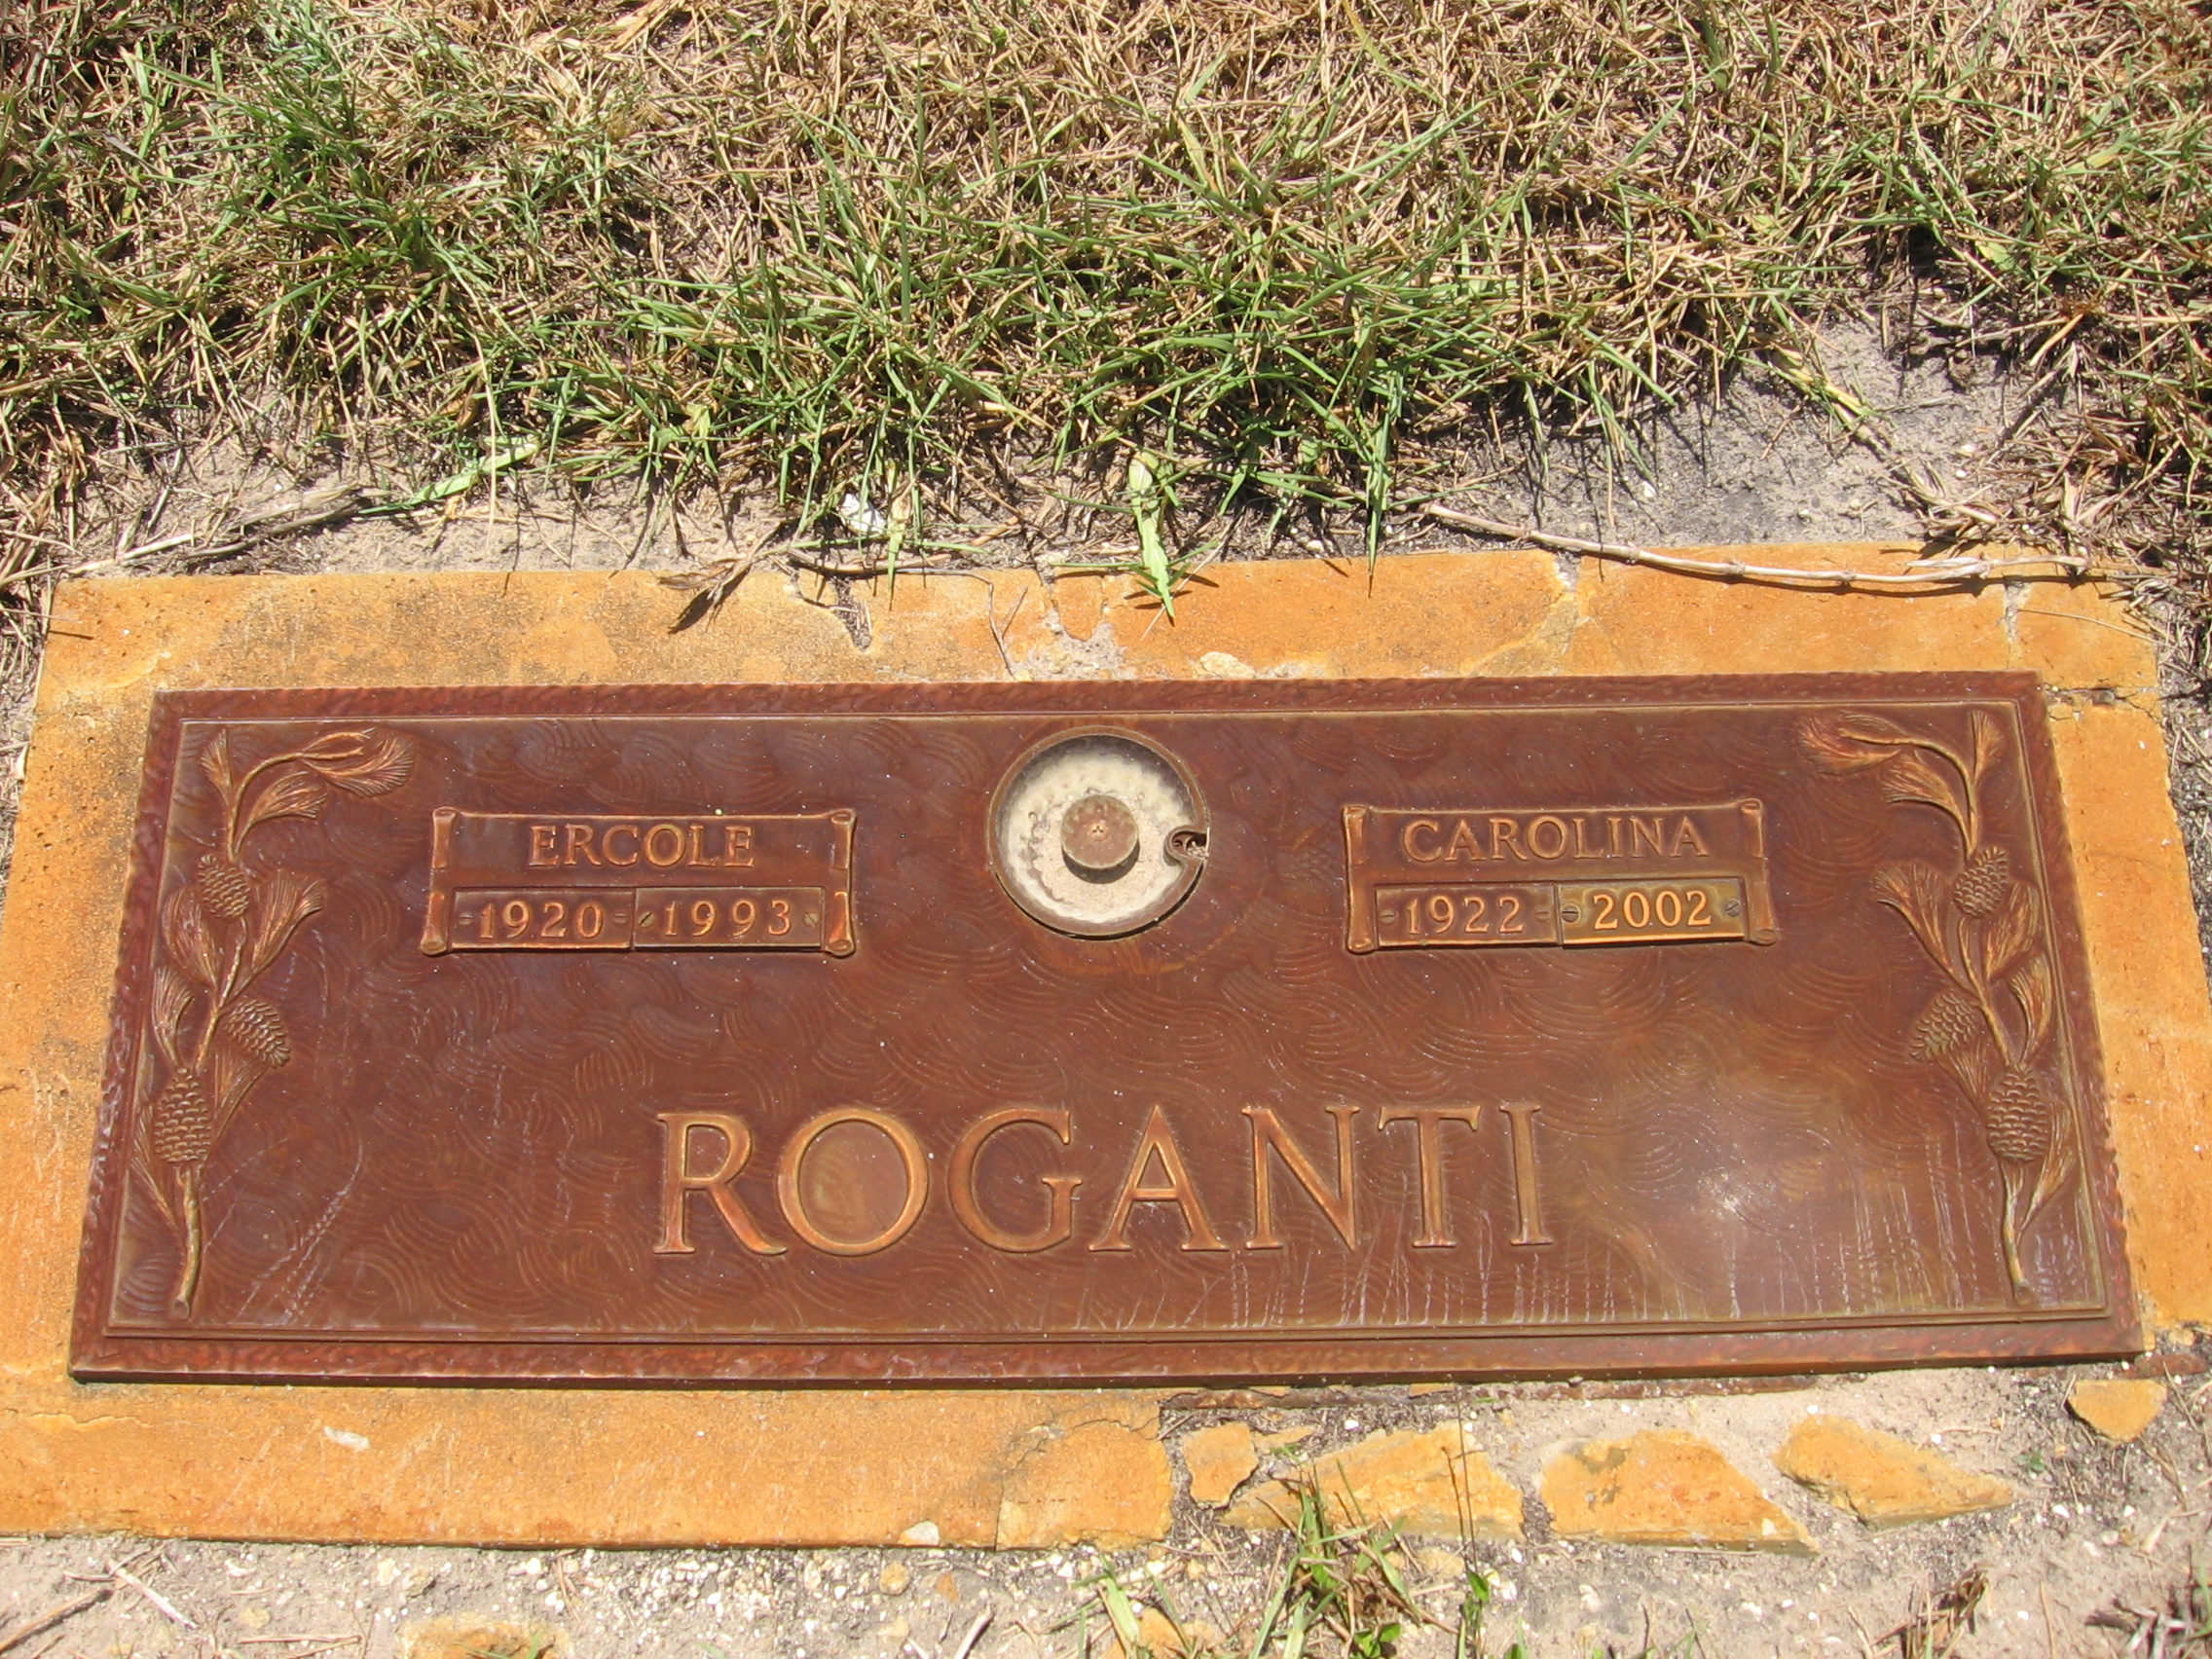 Ercole Roganti